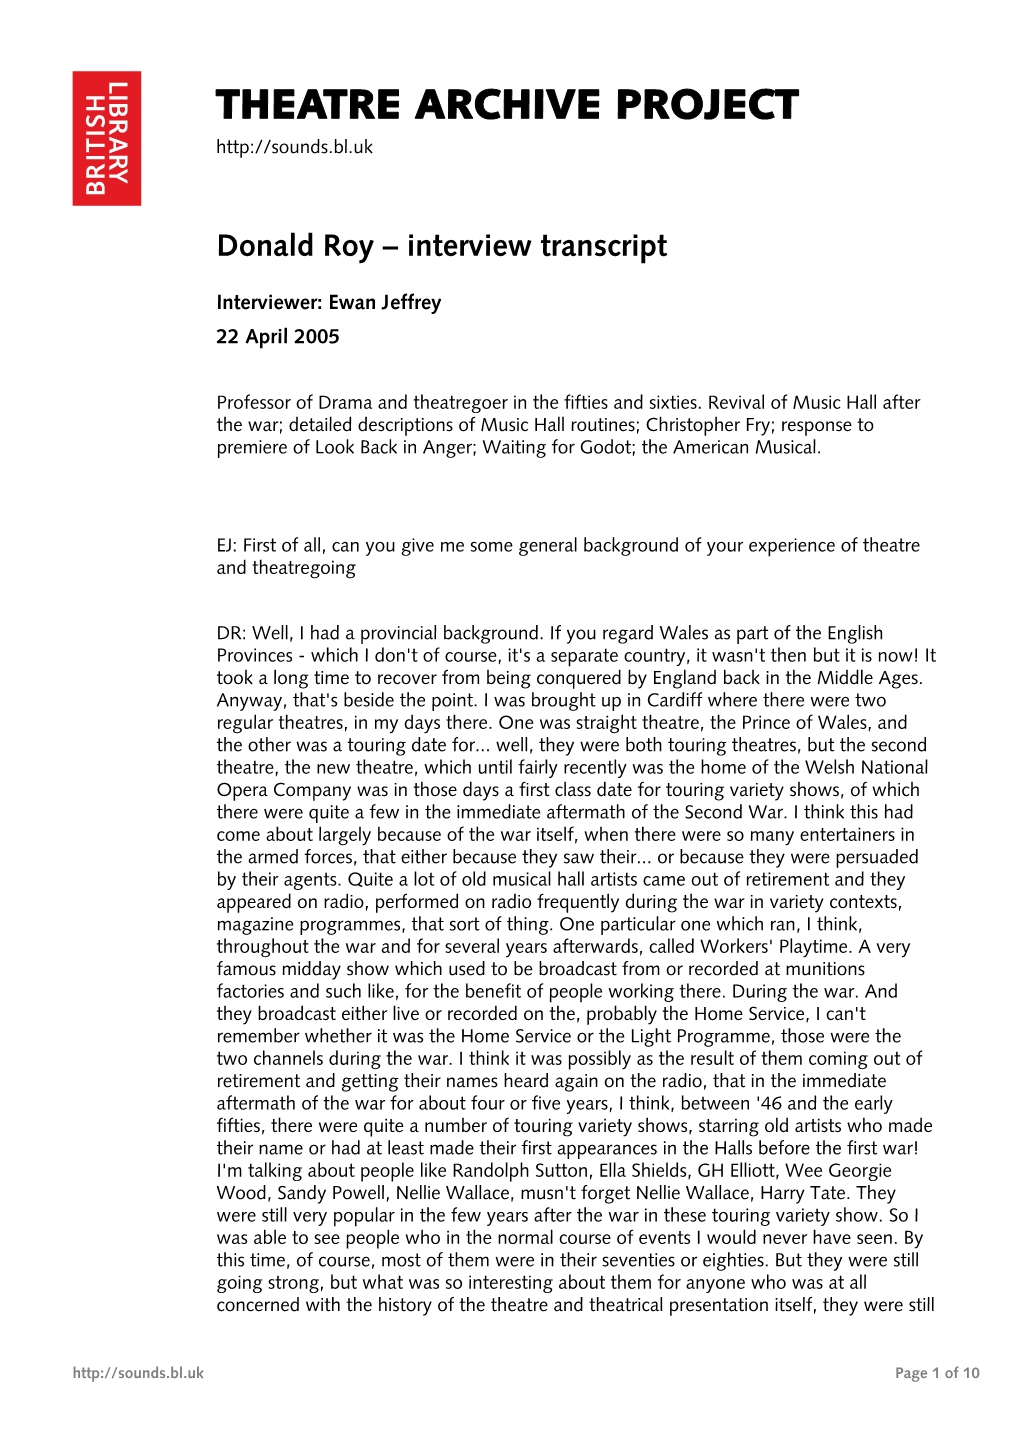 Donald Roy – Interview Transcript